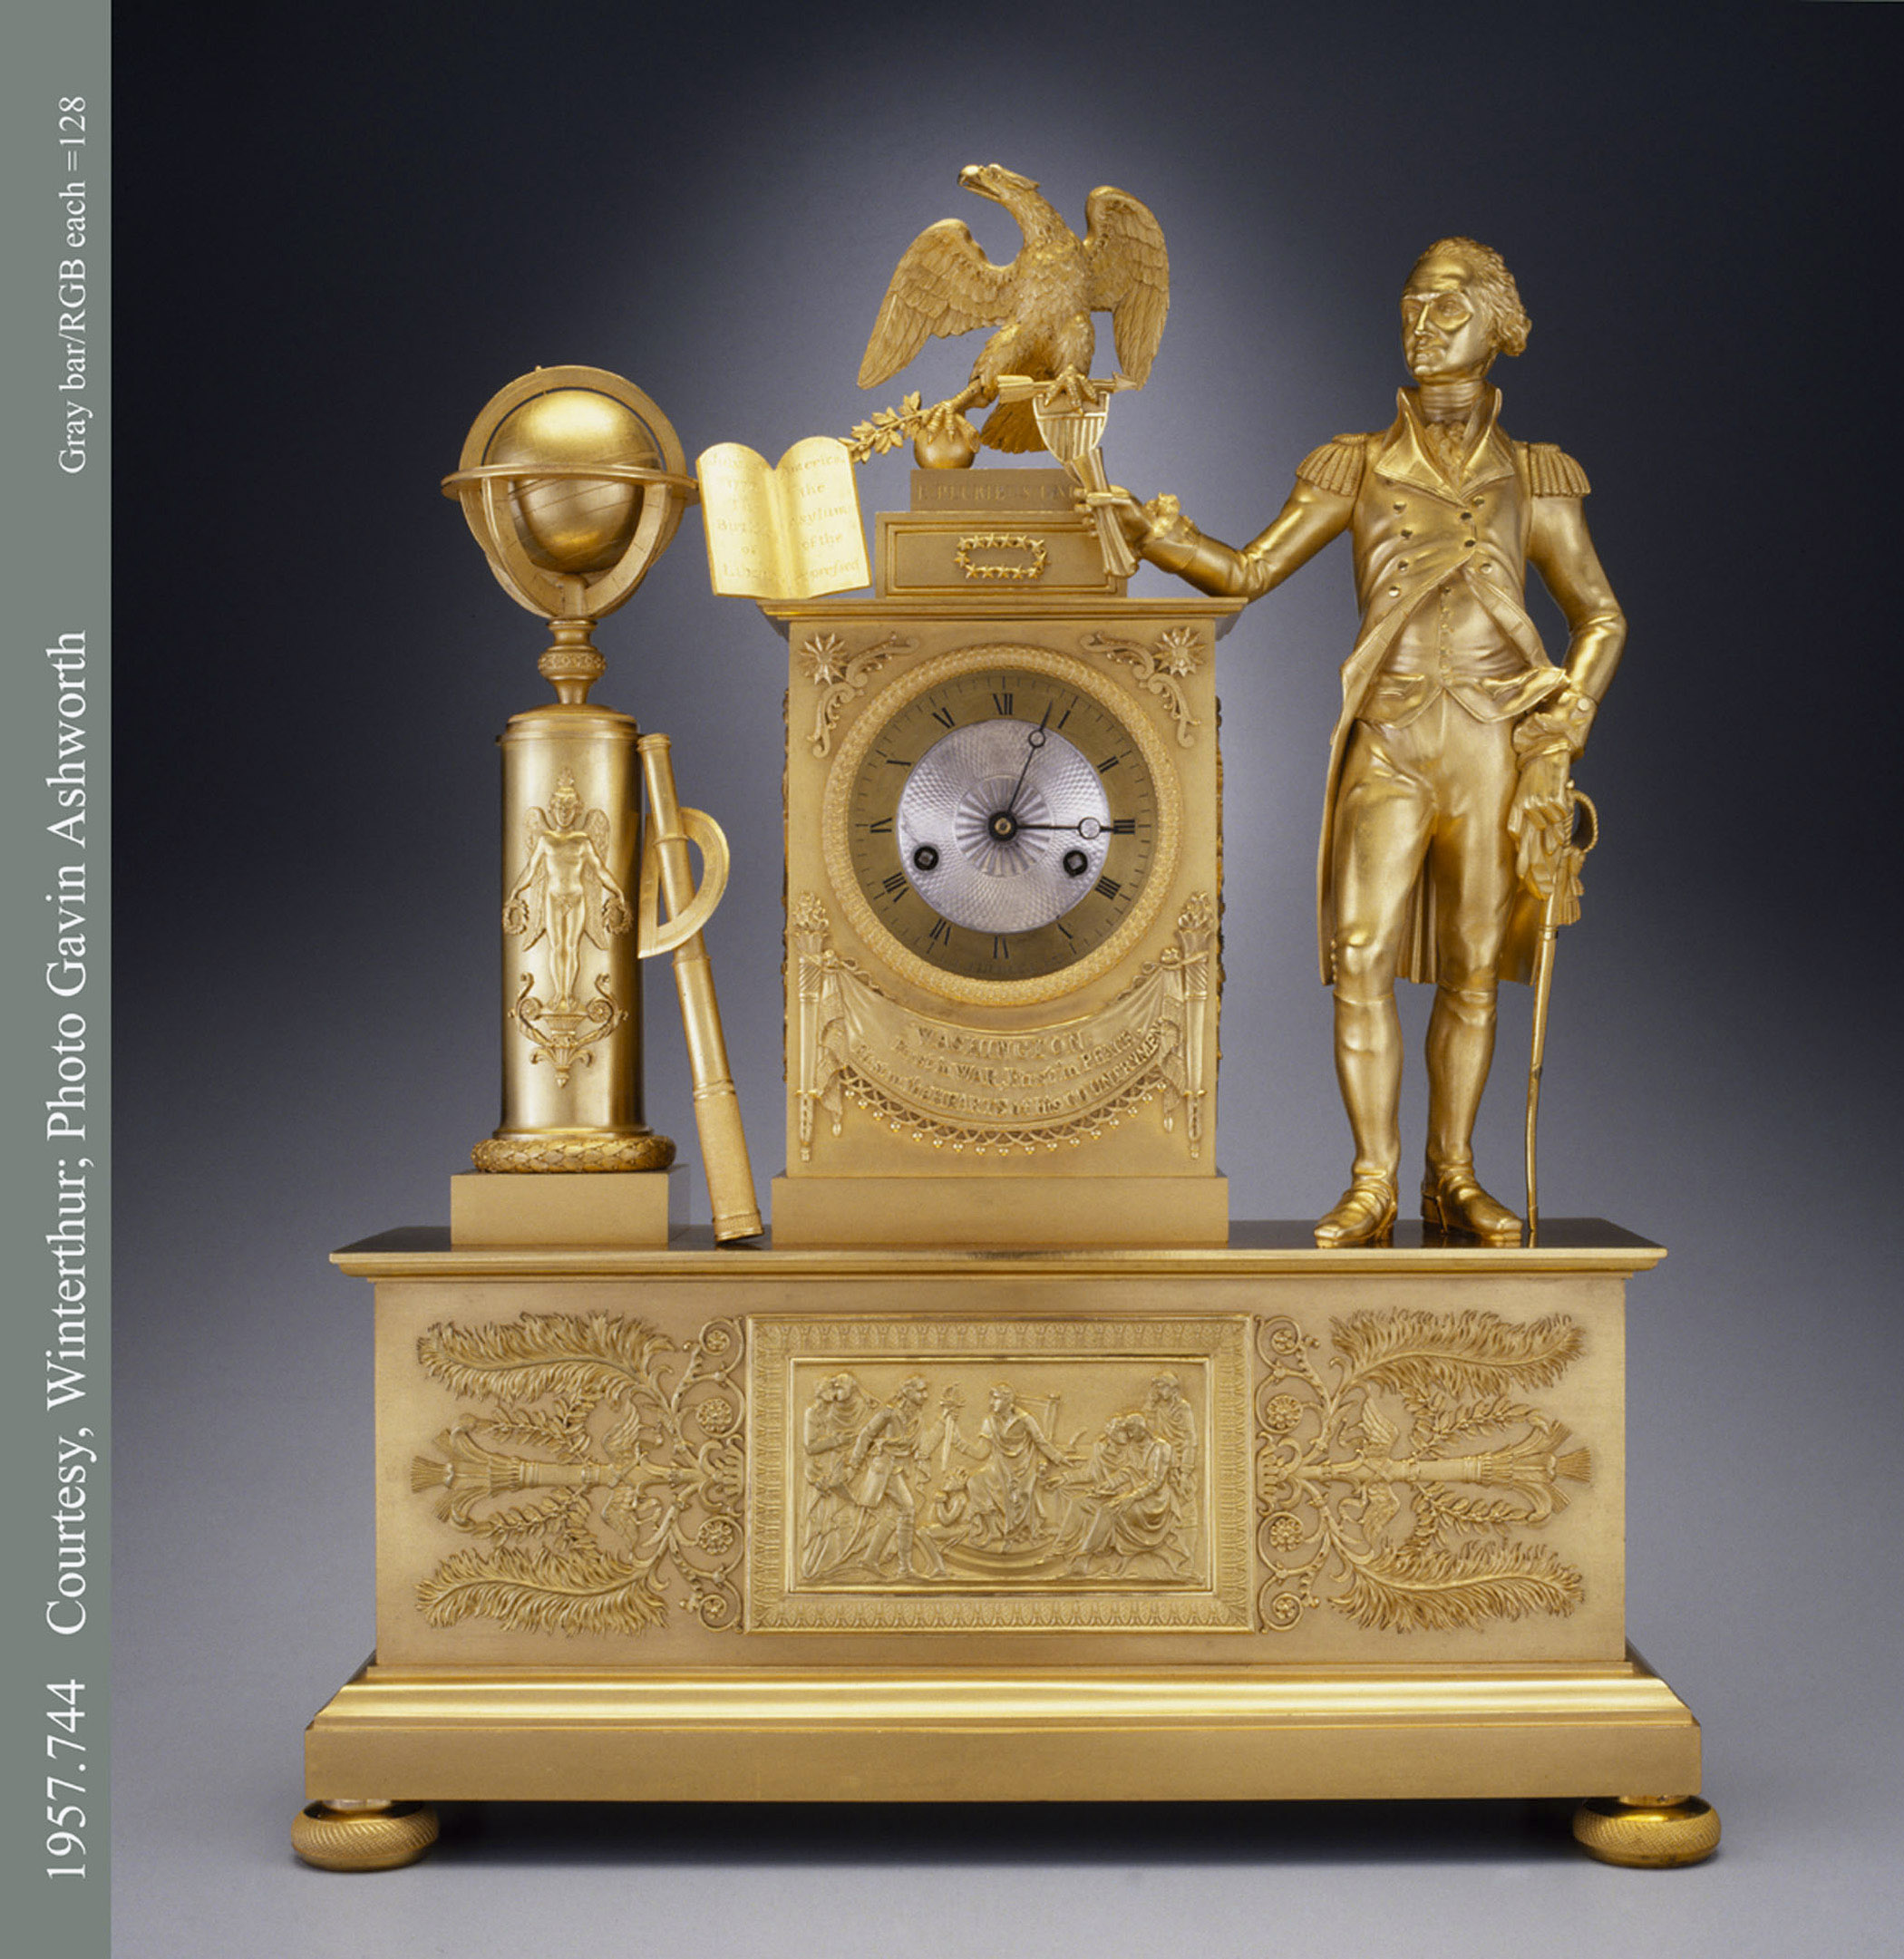 Clocks, Watches, and Scientific Instruments - Clock